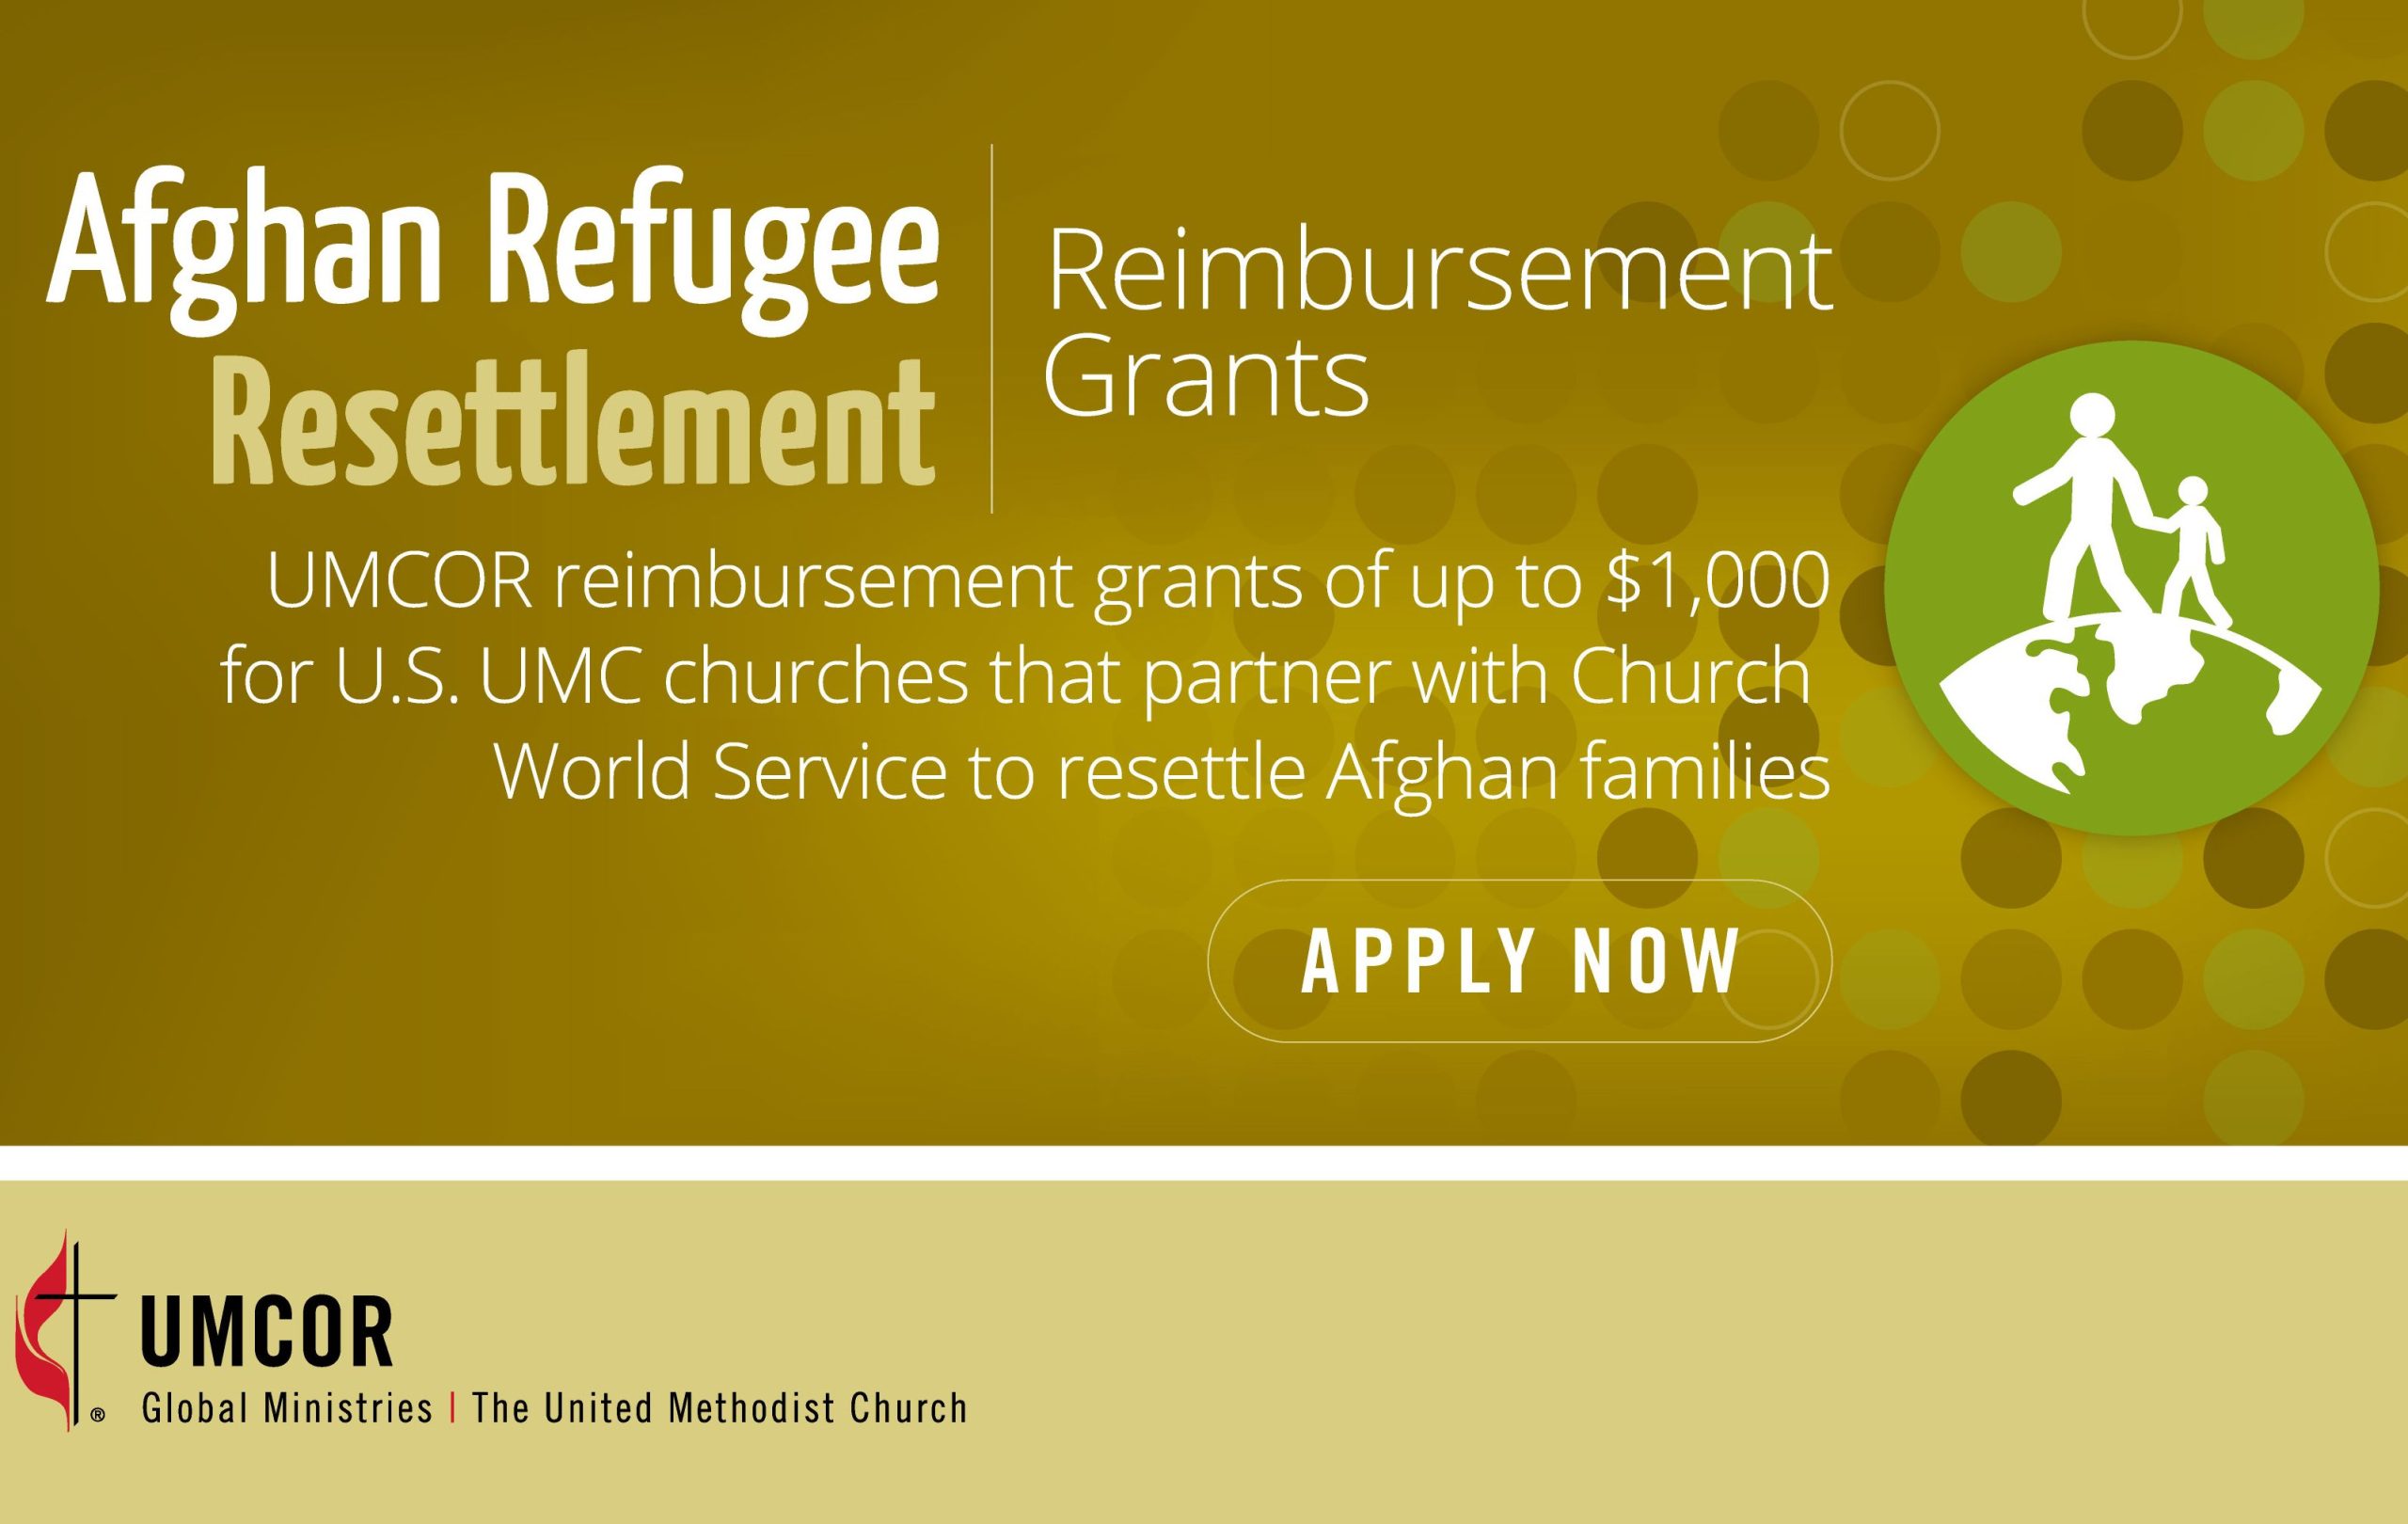 Afghan Resettlement assistance